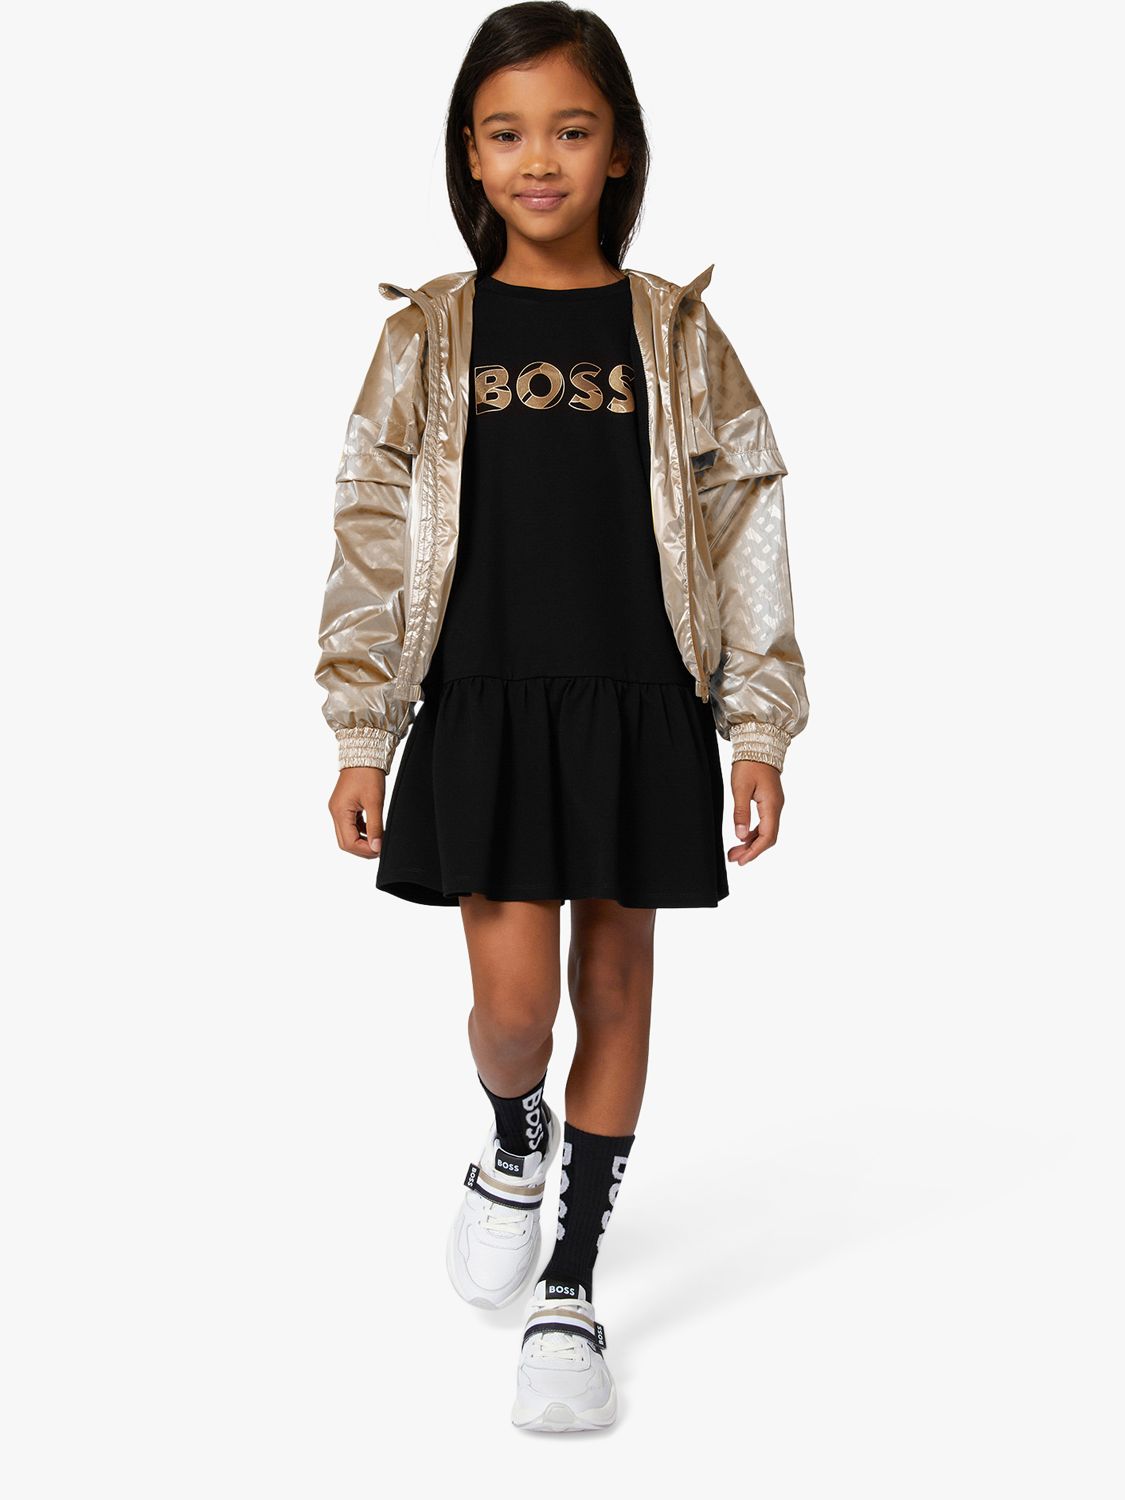 BOSS Kids' Milano Logo Dress, Black, 10 years